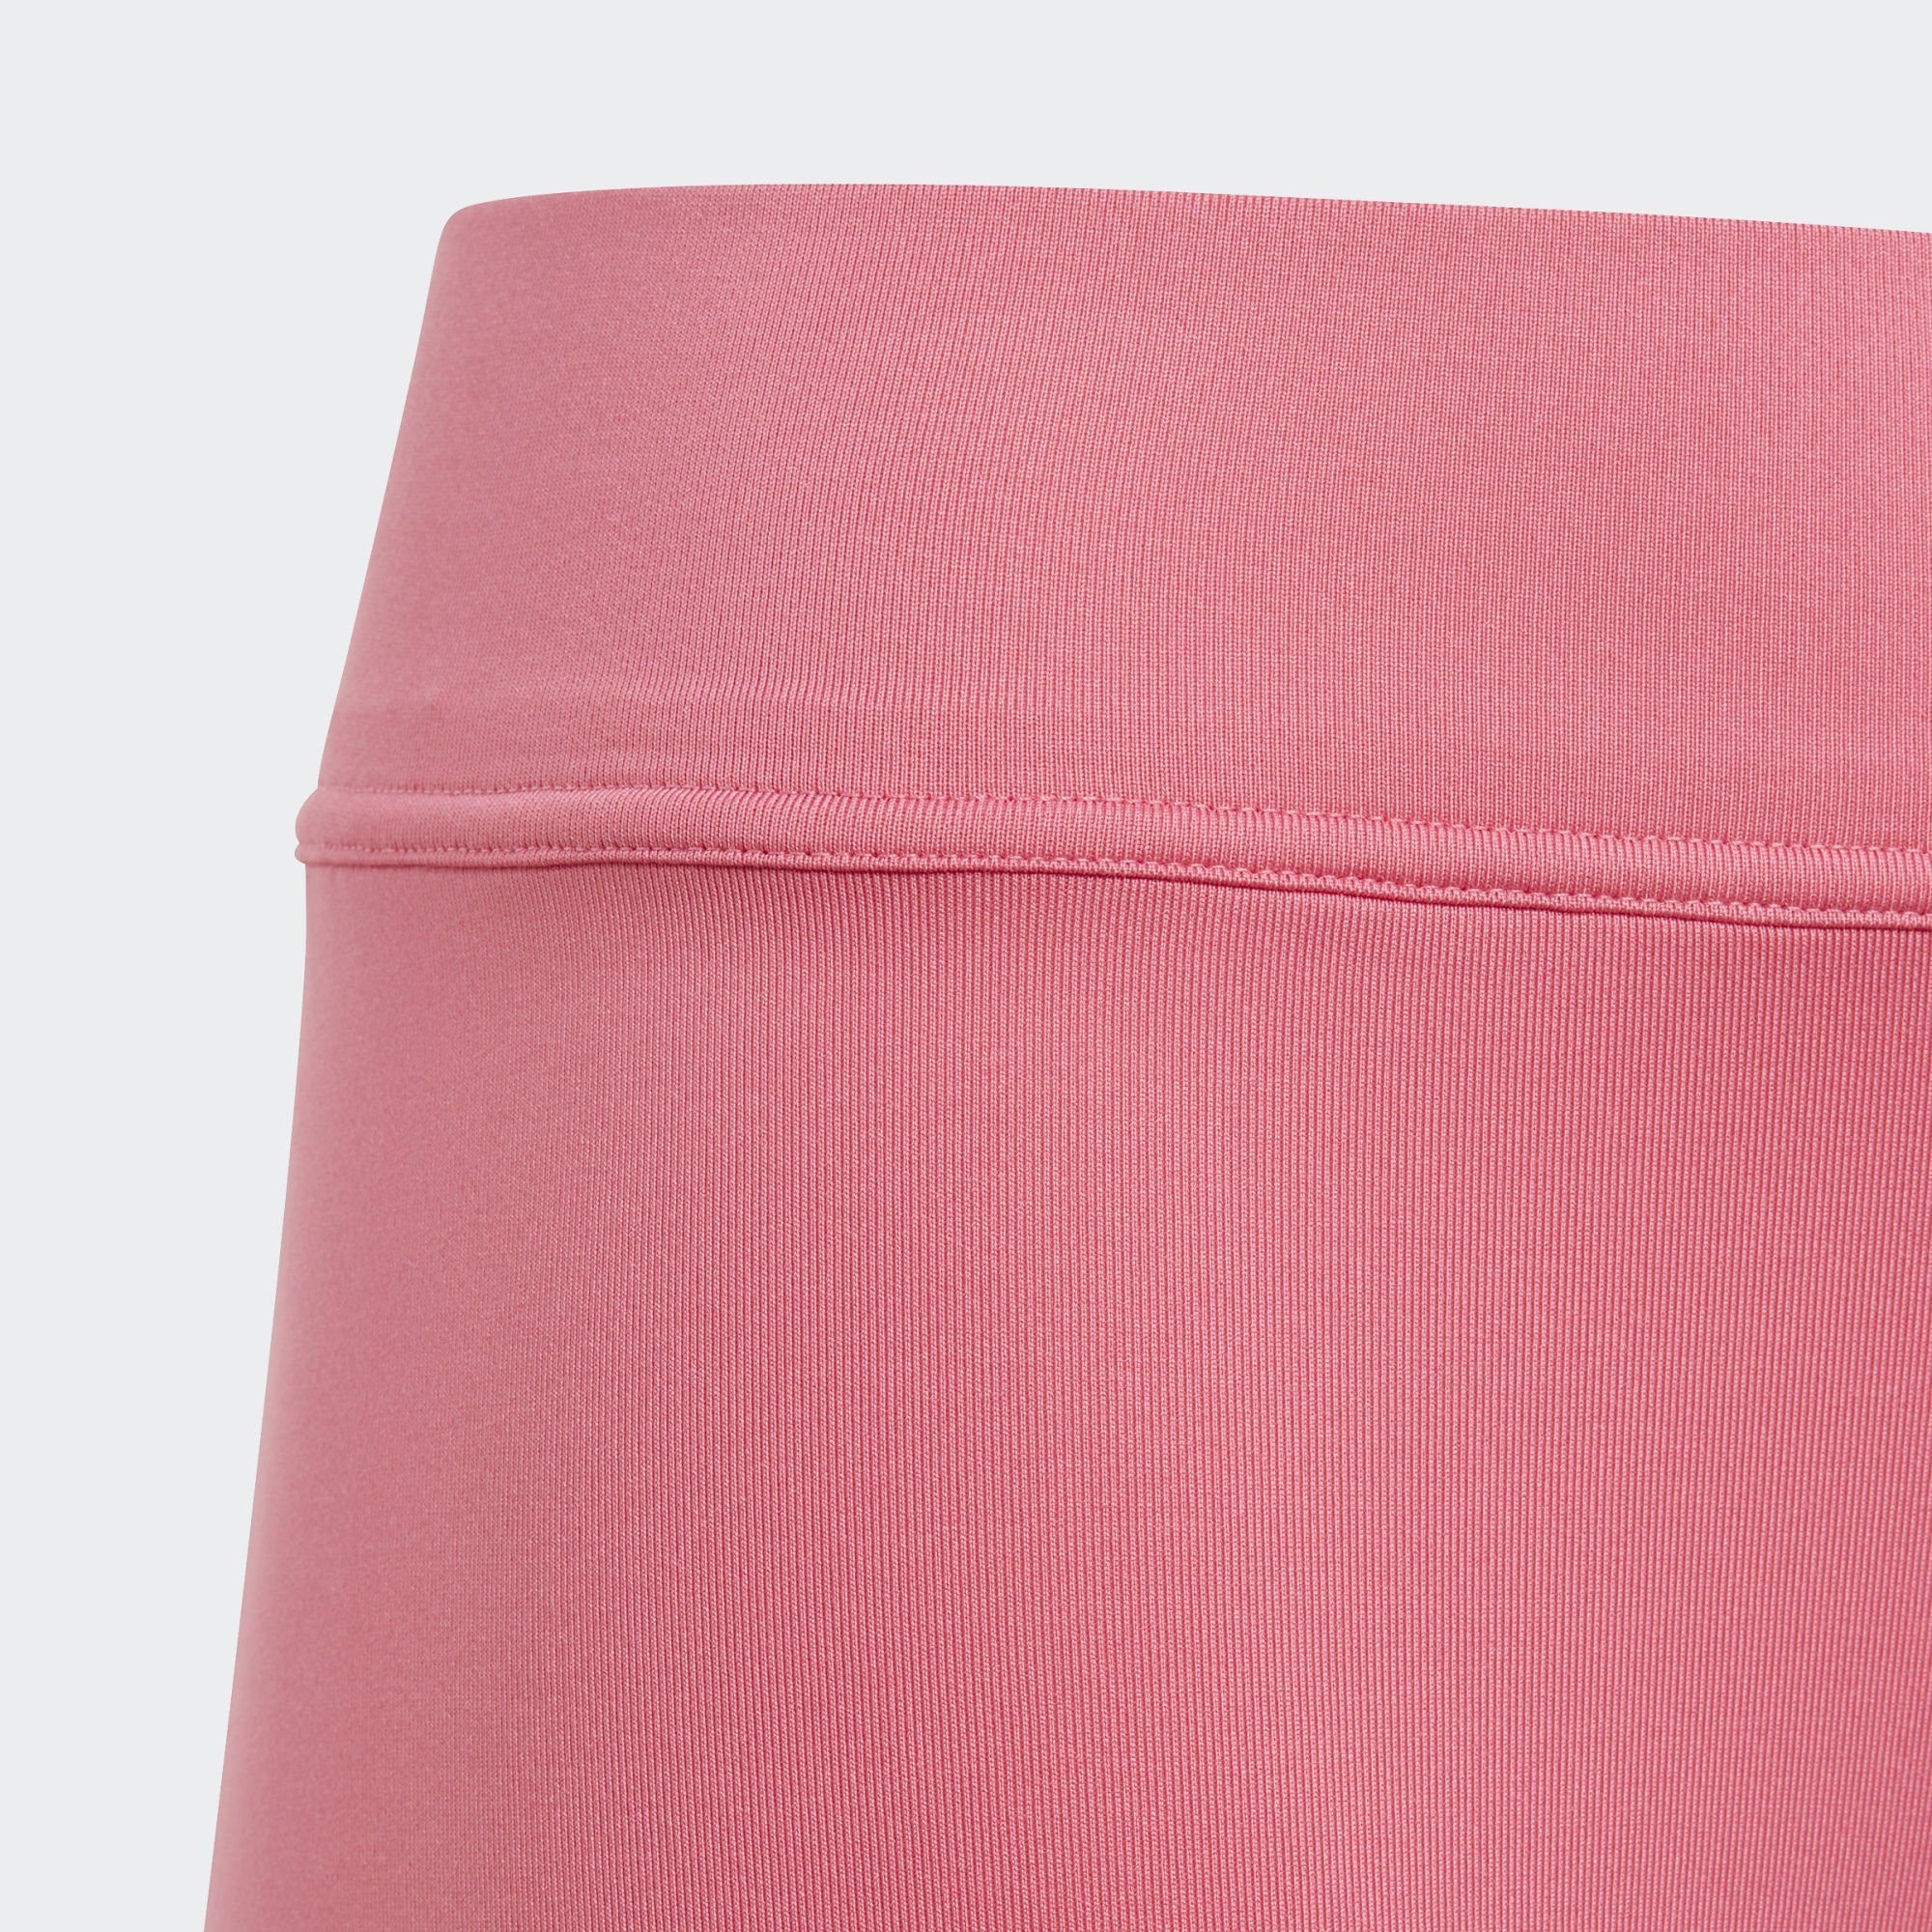 Fusion Pink TENNIS Tenniskleid Performance adidas KLEID CLUB